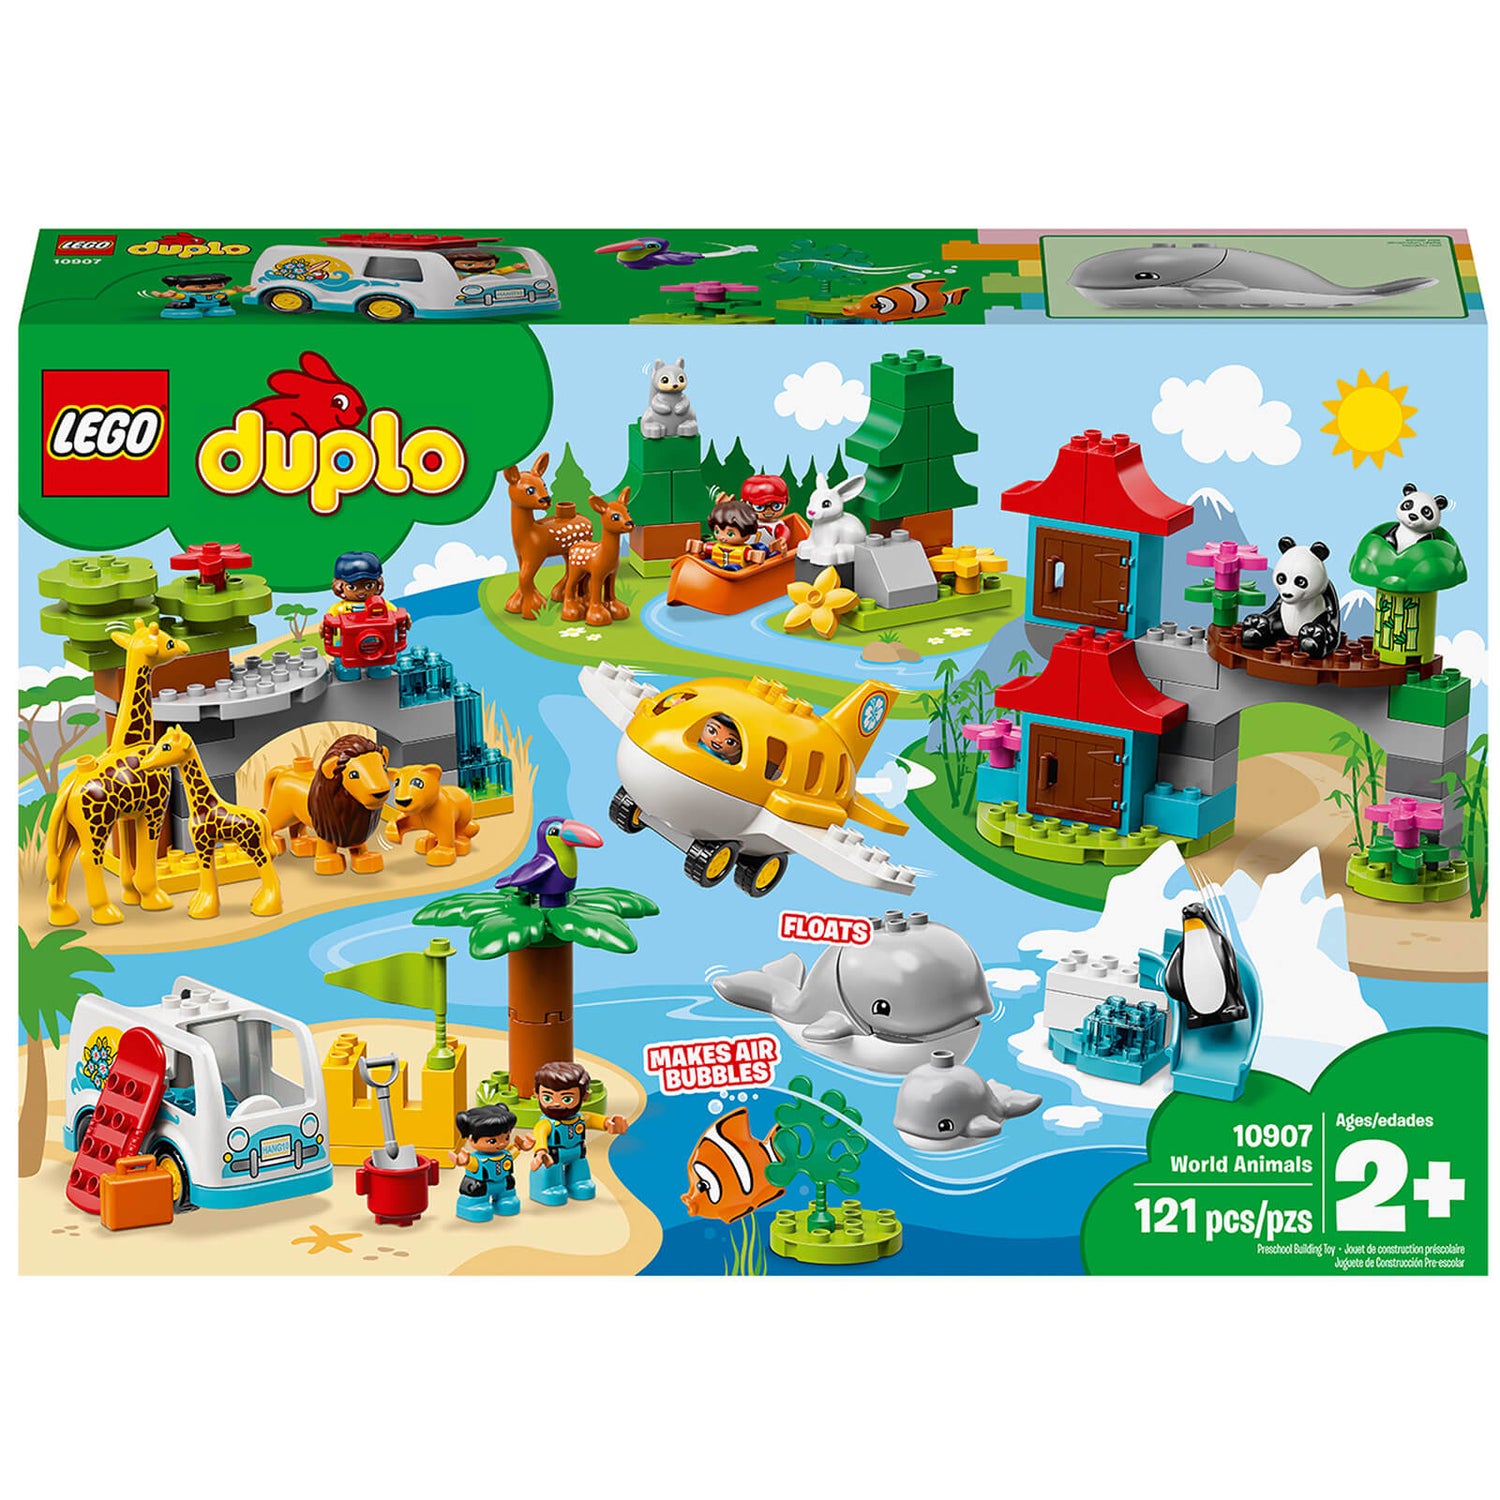 LEGO DUPLO Town: World Animals Toys for Toddlers (10907) Toys - Zavvi UK